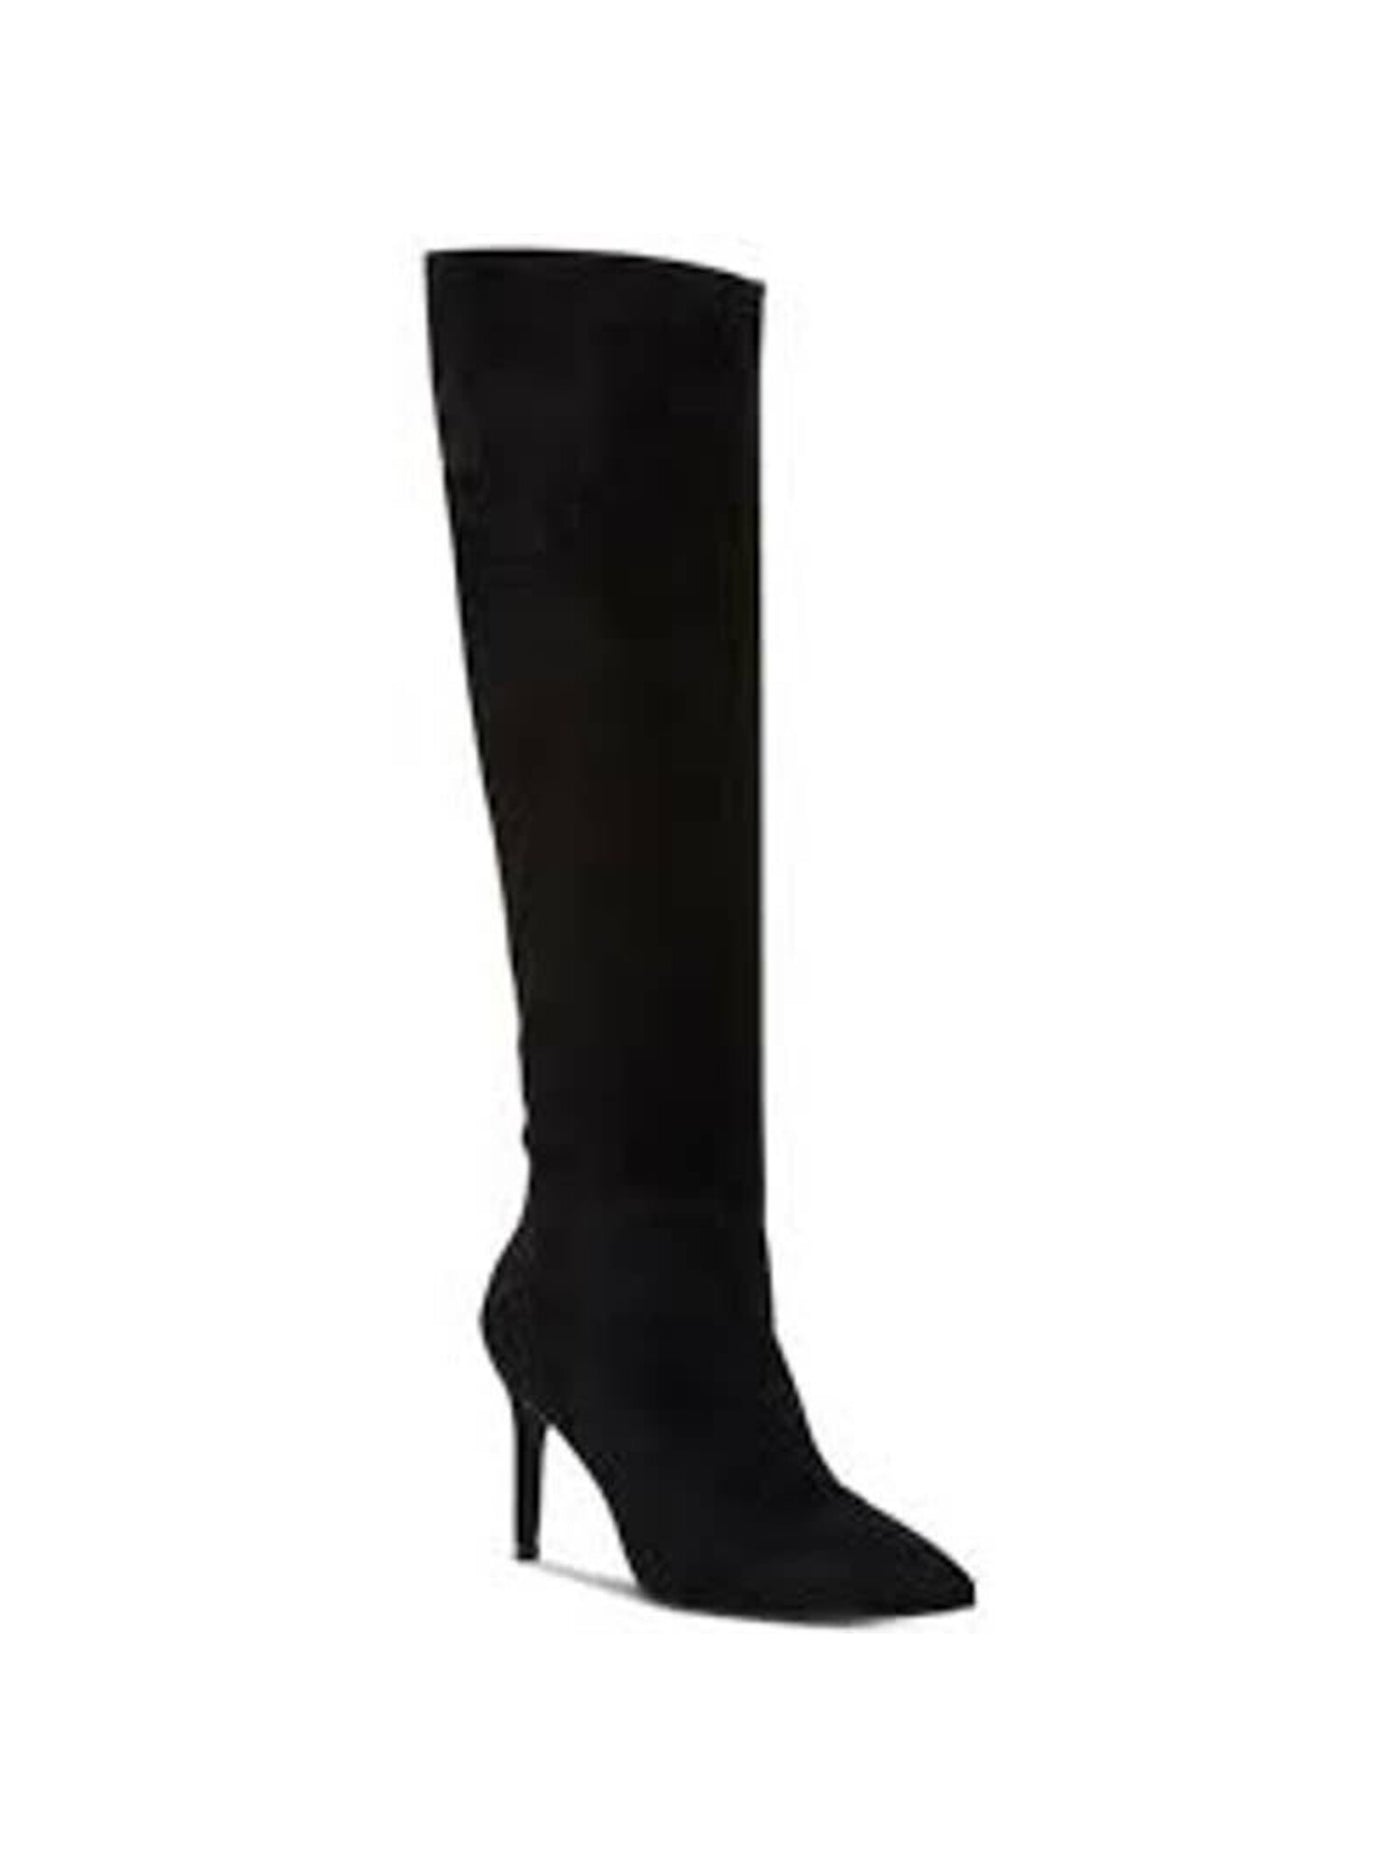 STEVE MADDEN Womens Black Padded Kimari Pointed Toe Stiletto Heeled Boots 5.5 M